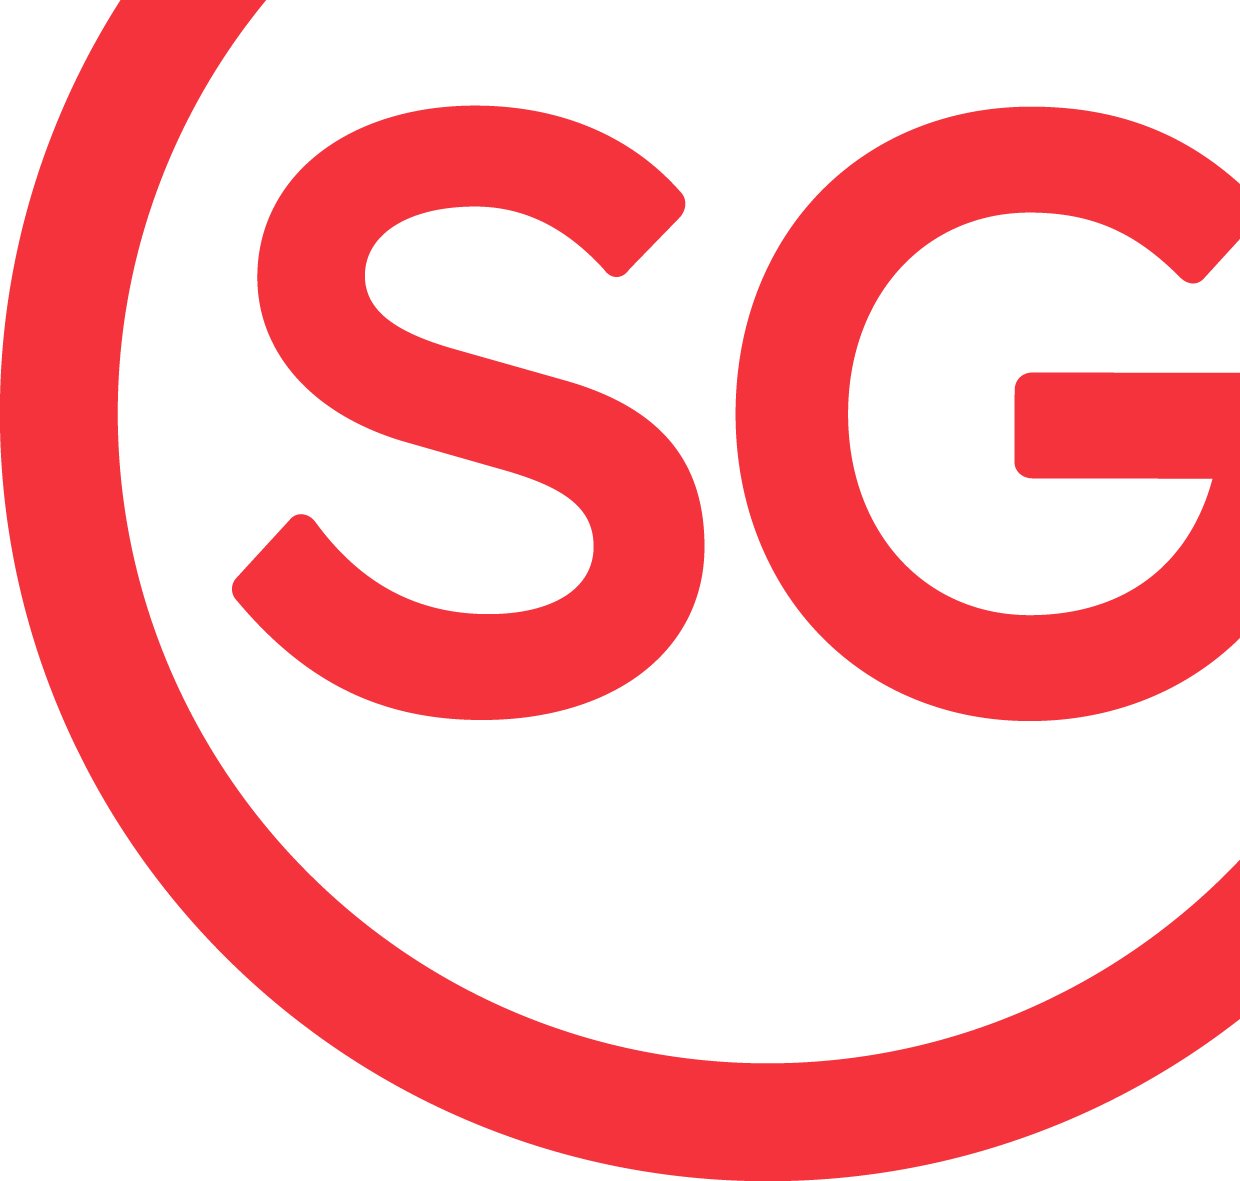 Logo Of Singapore Tourism Board (1240x1181)